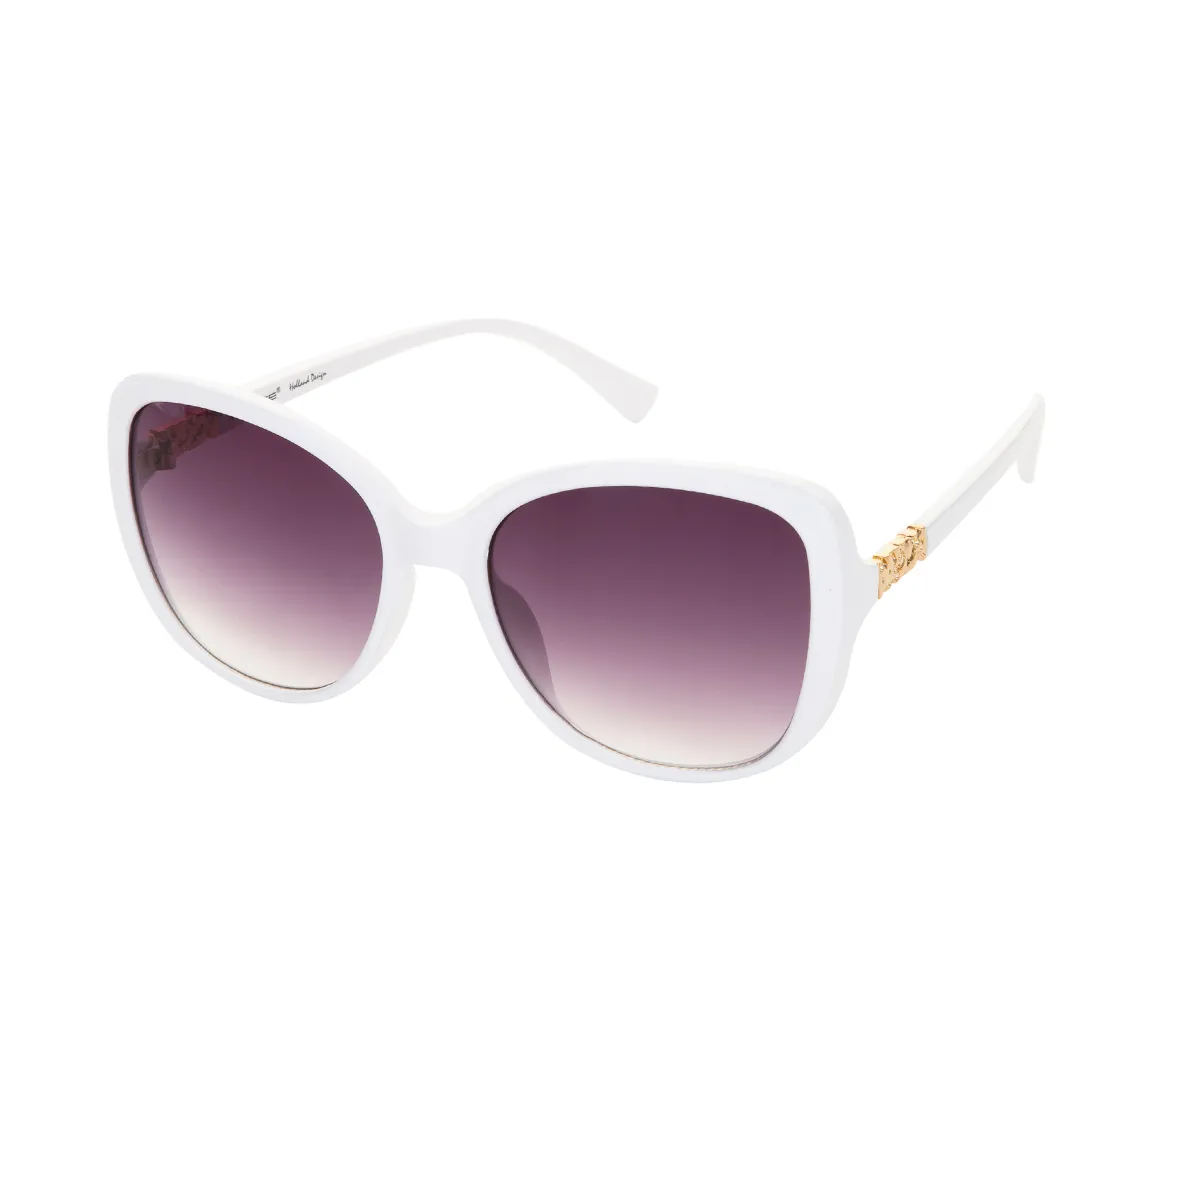 Darry - Oval White Sunglasses for Women